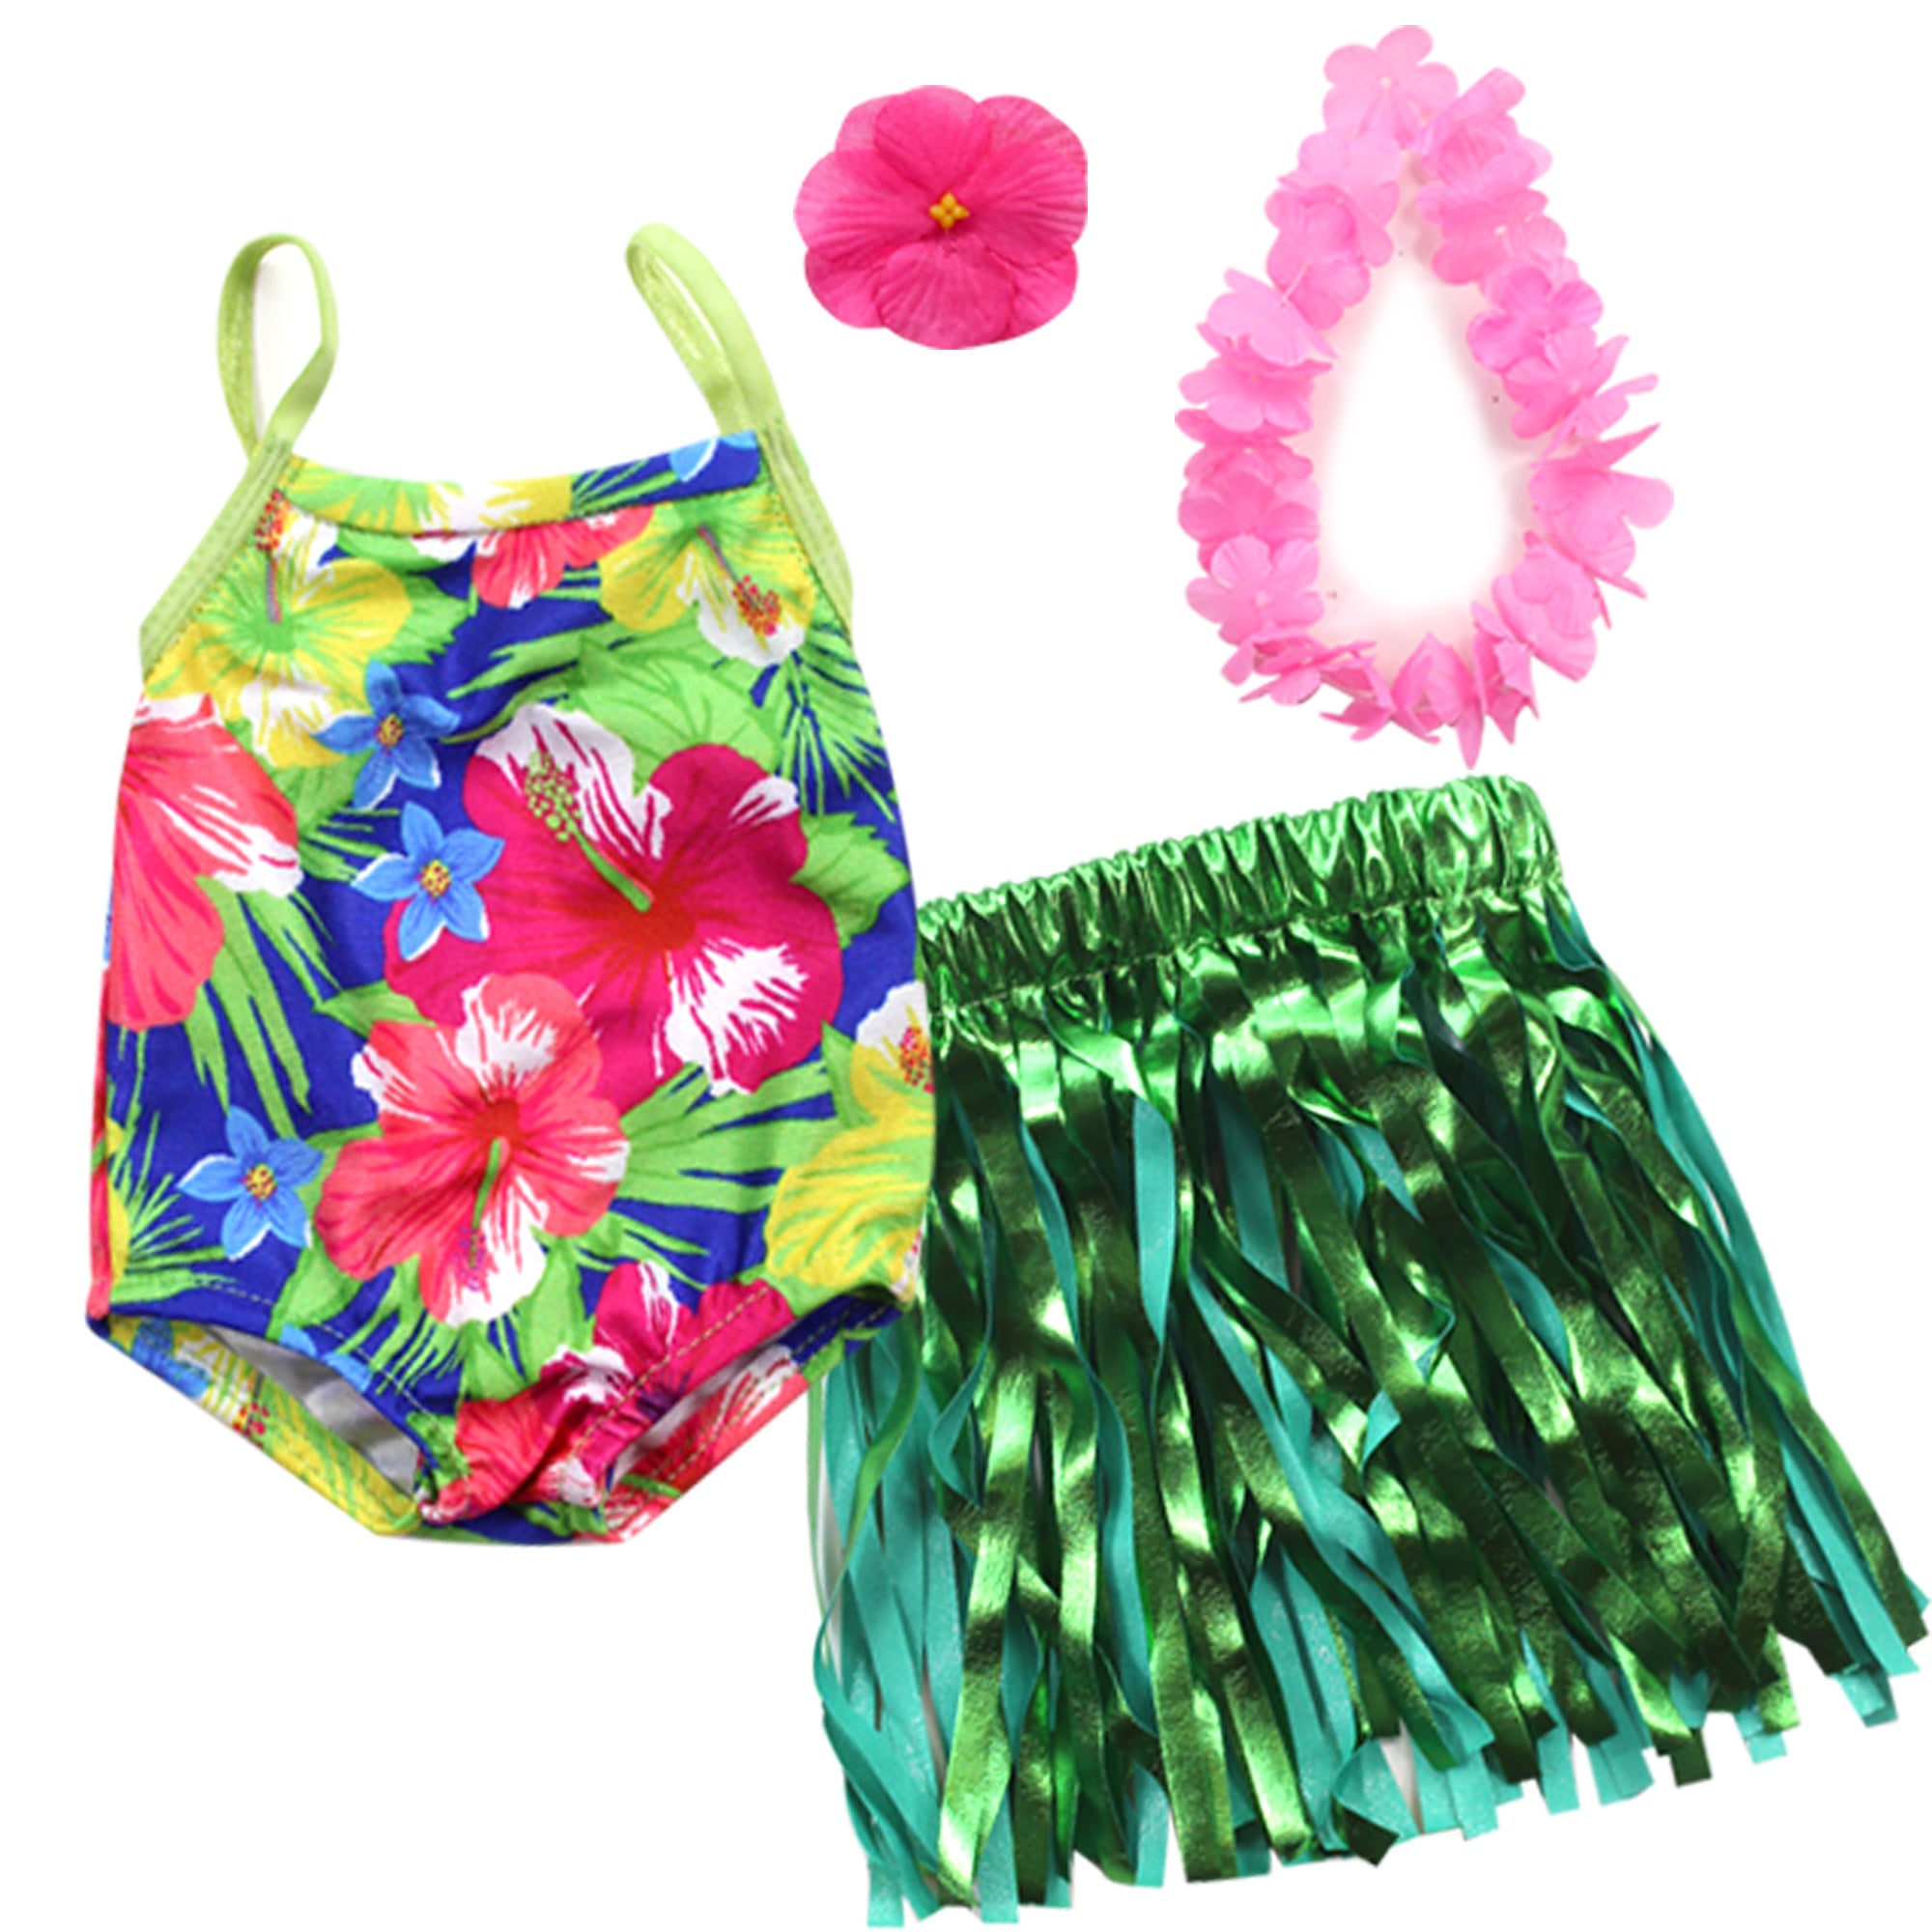 Sophia's - 18" Doll - Hawaiian Floral Bathing Suit, "Grass" Skirt, Floral Lei & Flower Hair clip